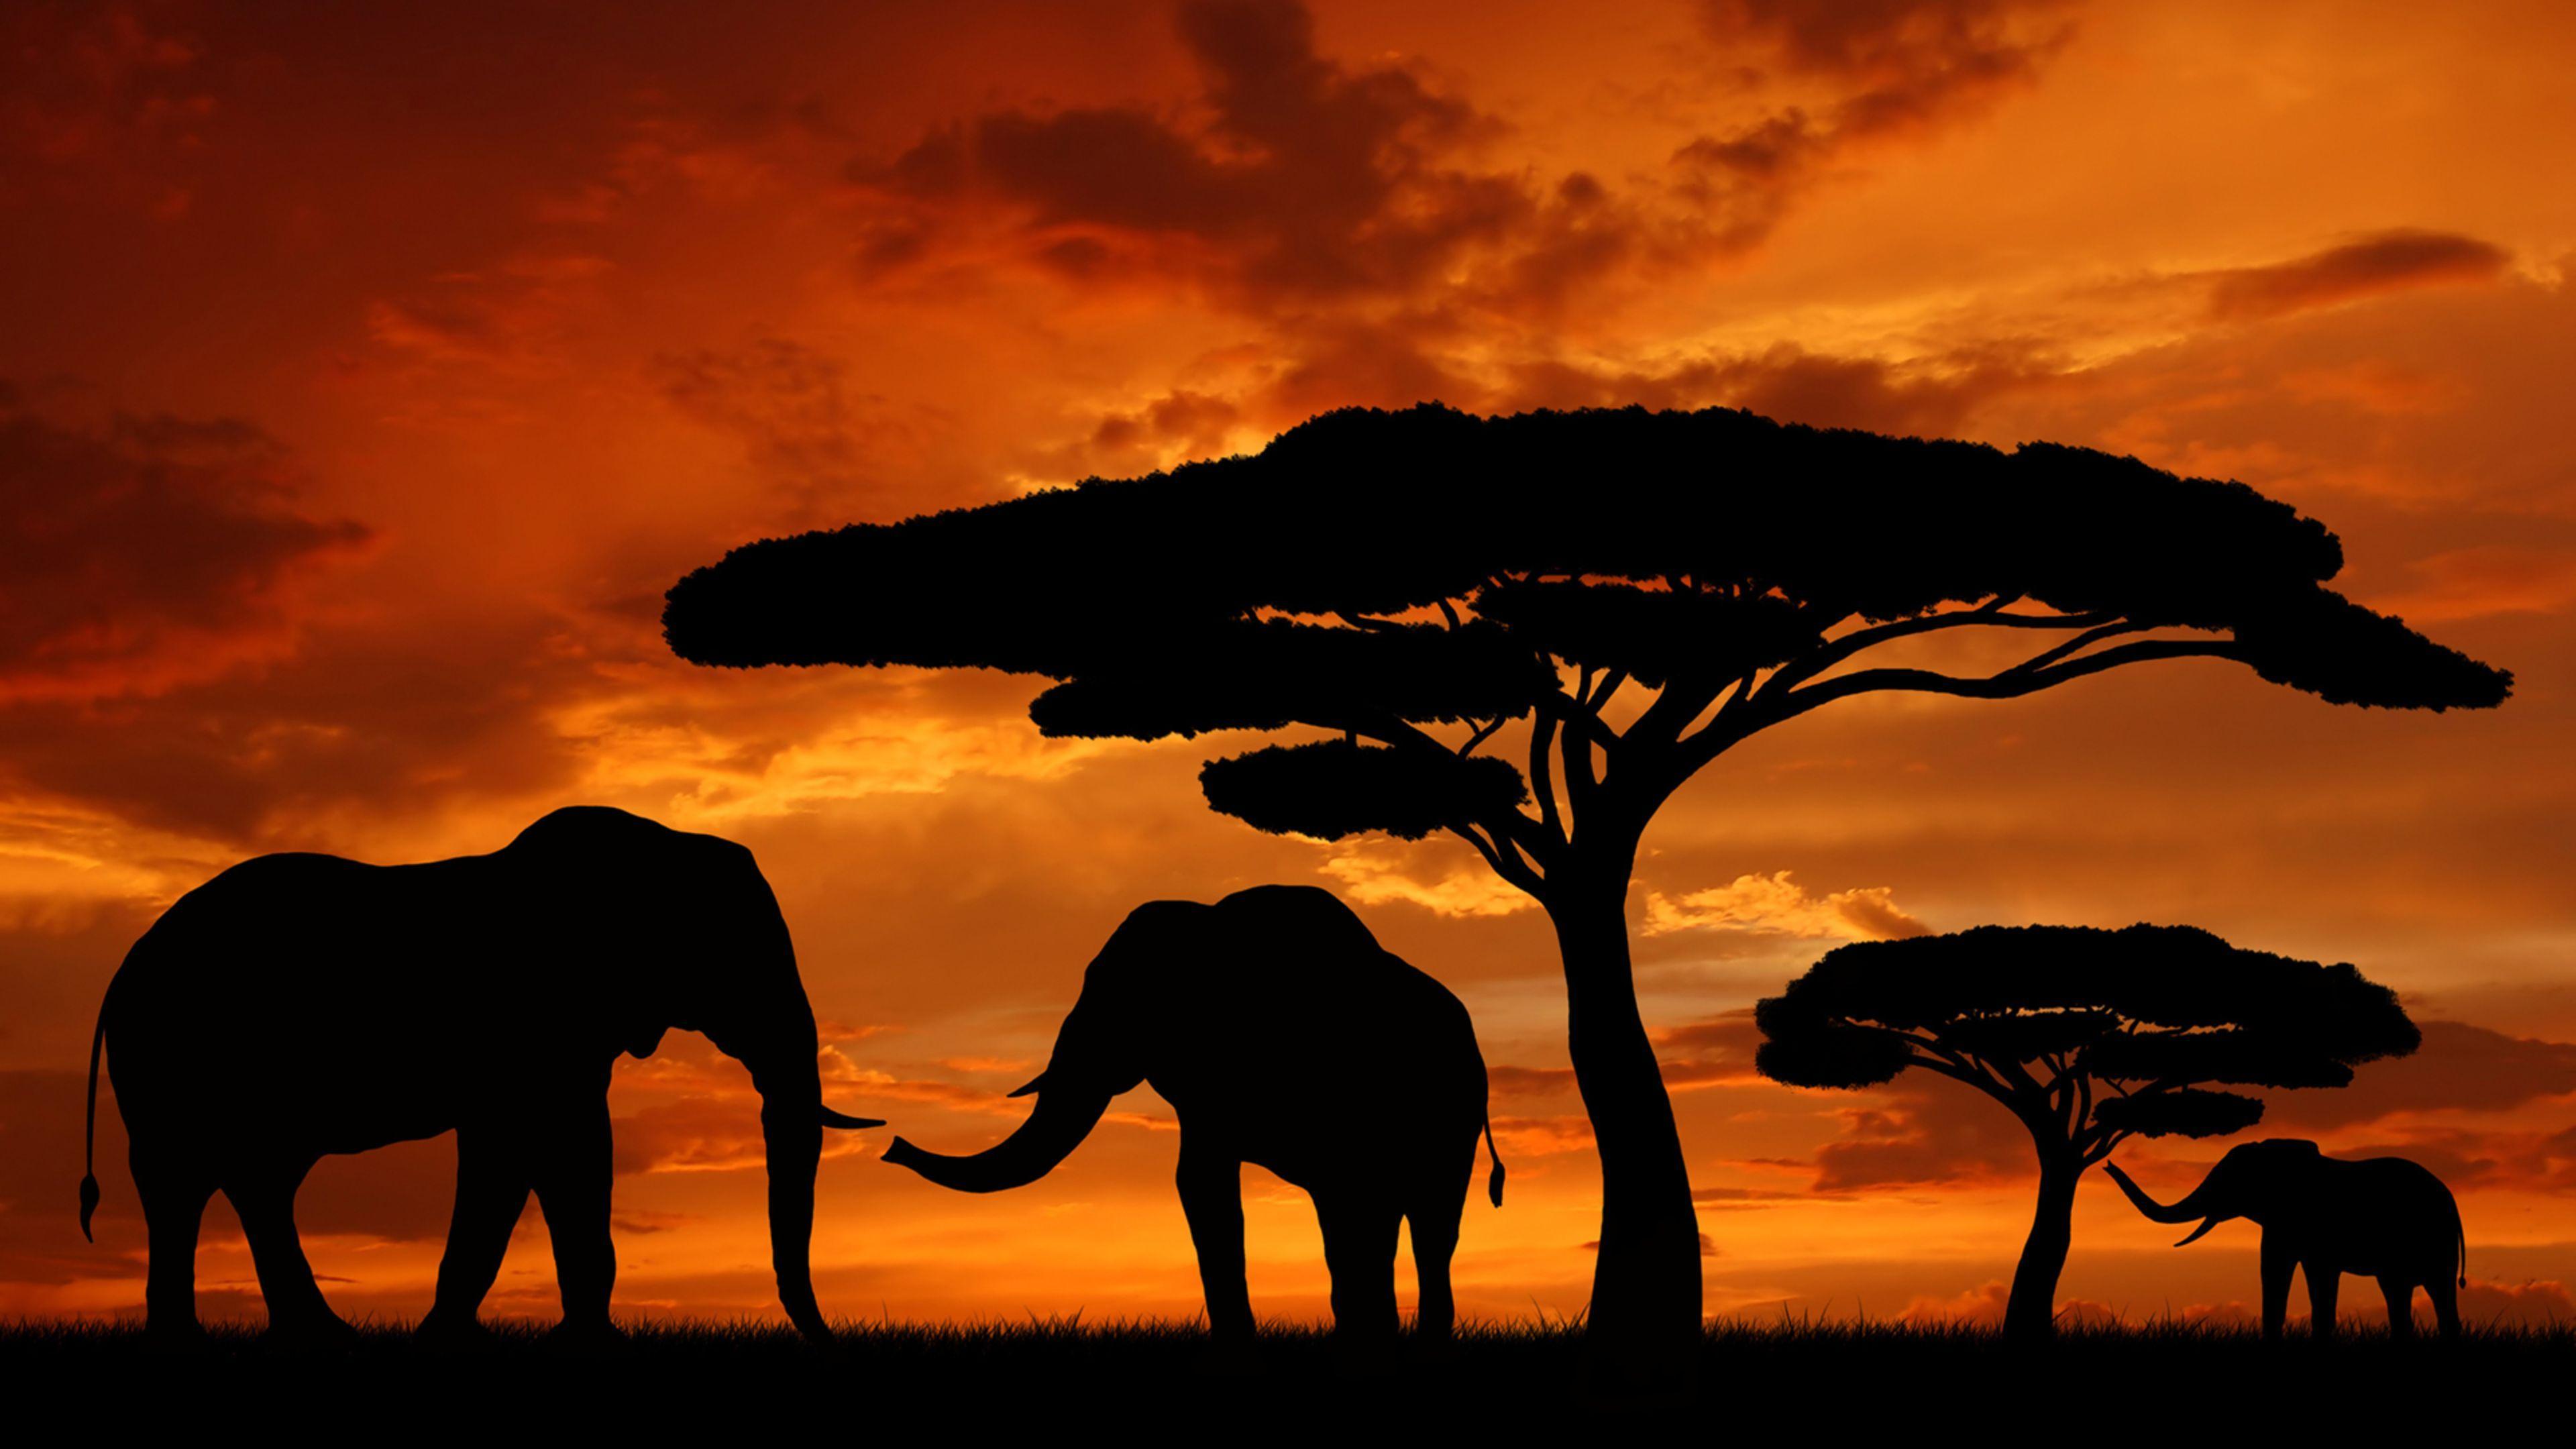 safari background image iphone